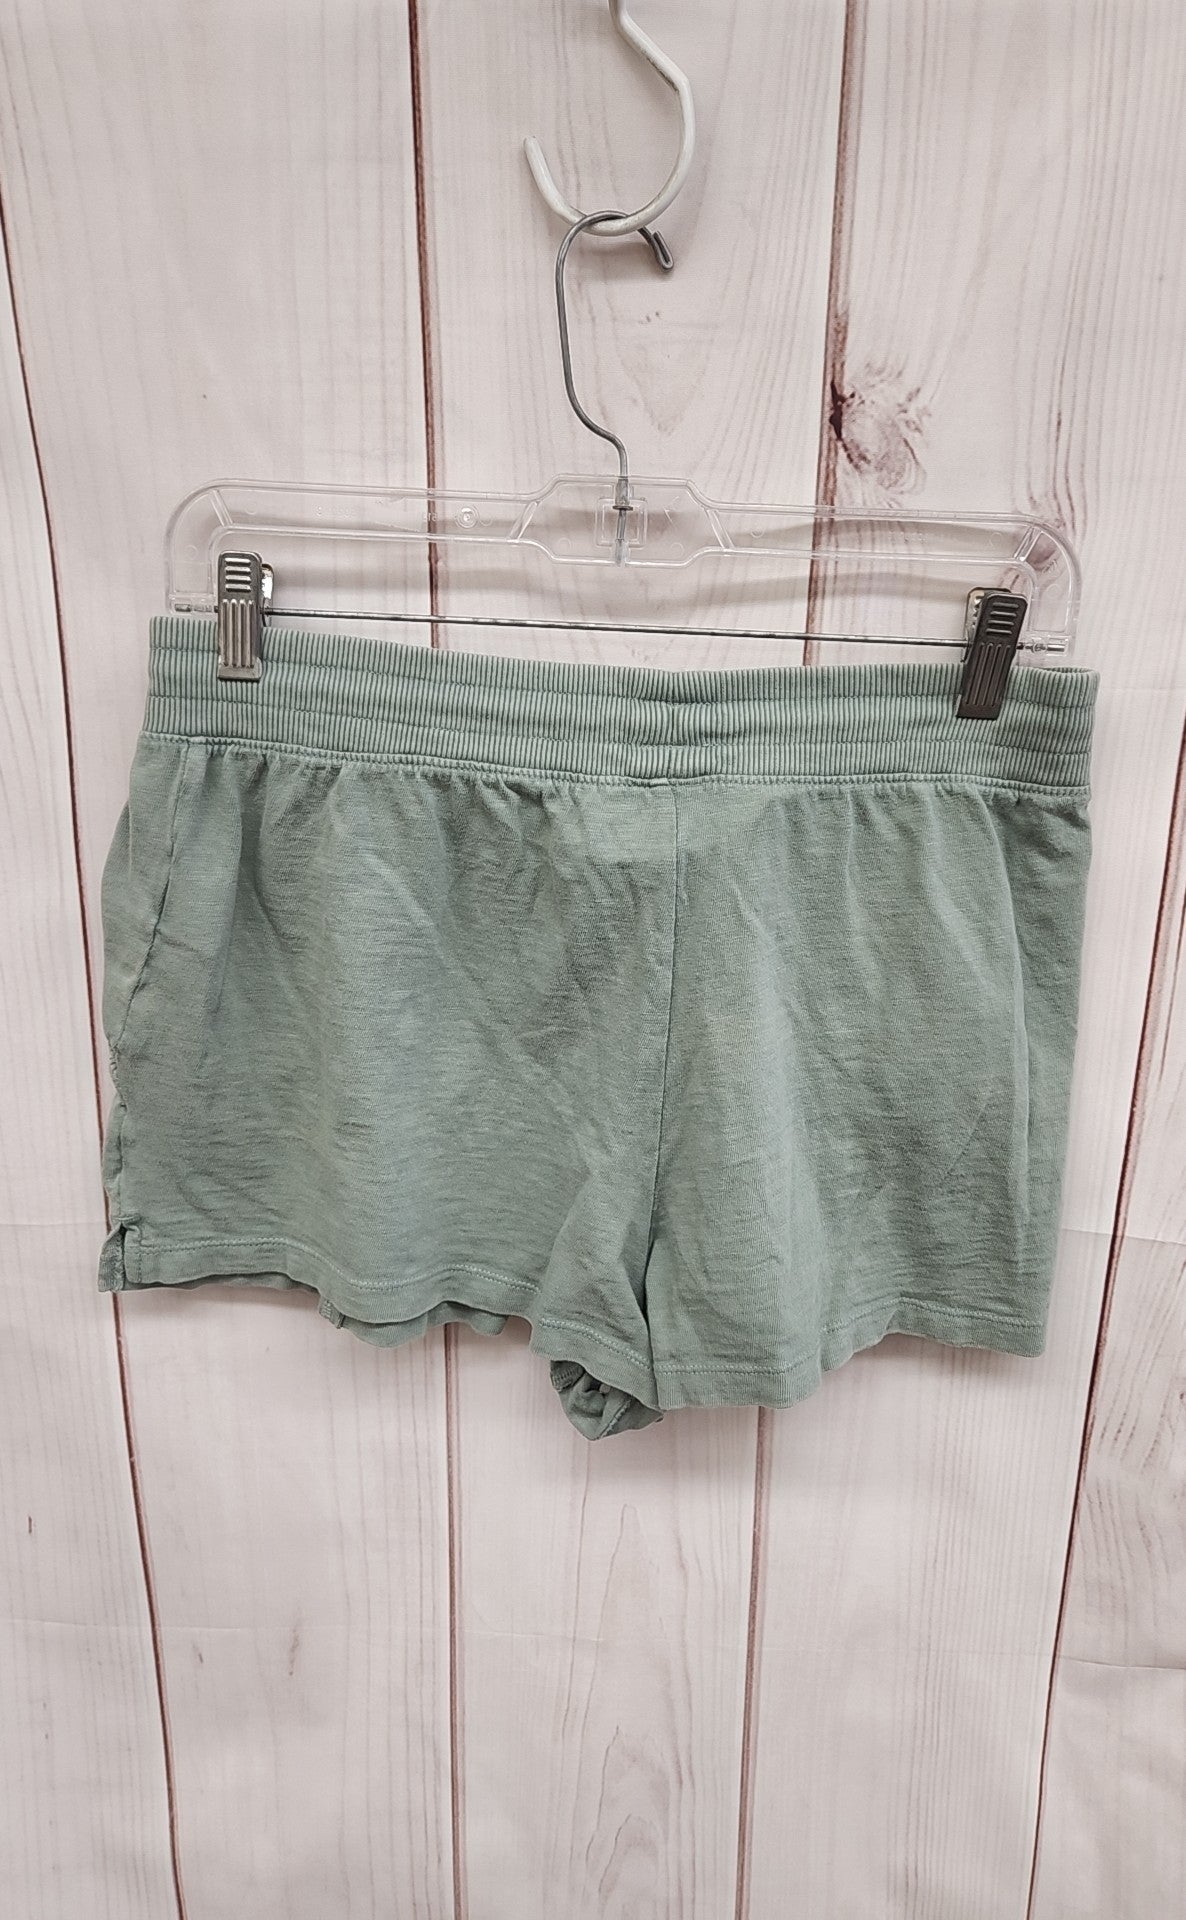 Gap Women's Size S Olive Shorts